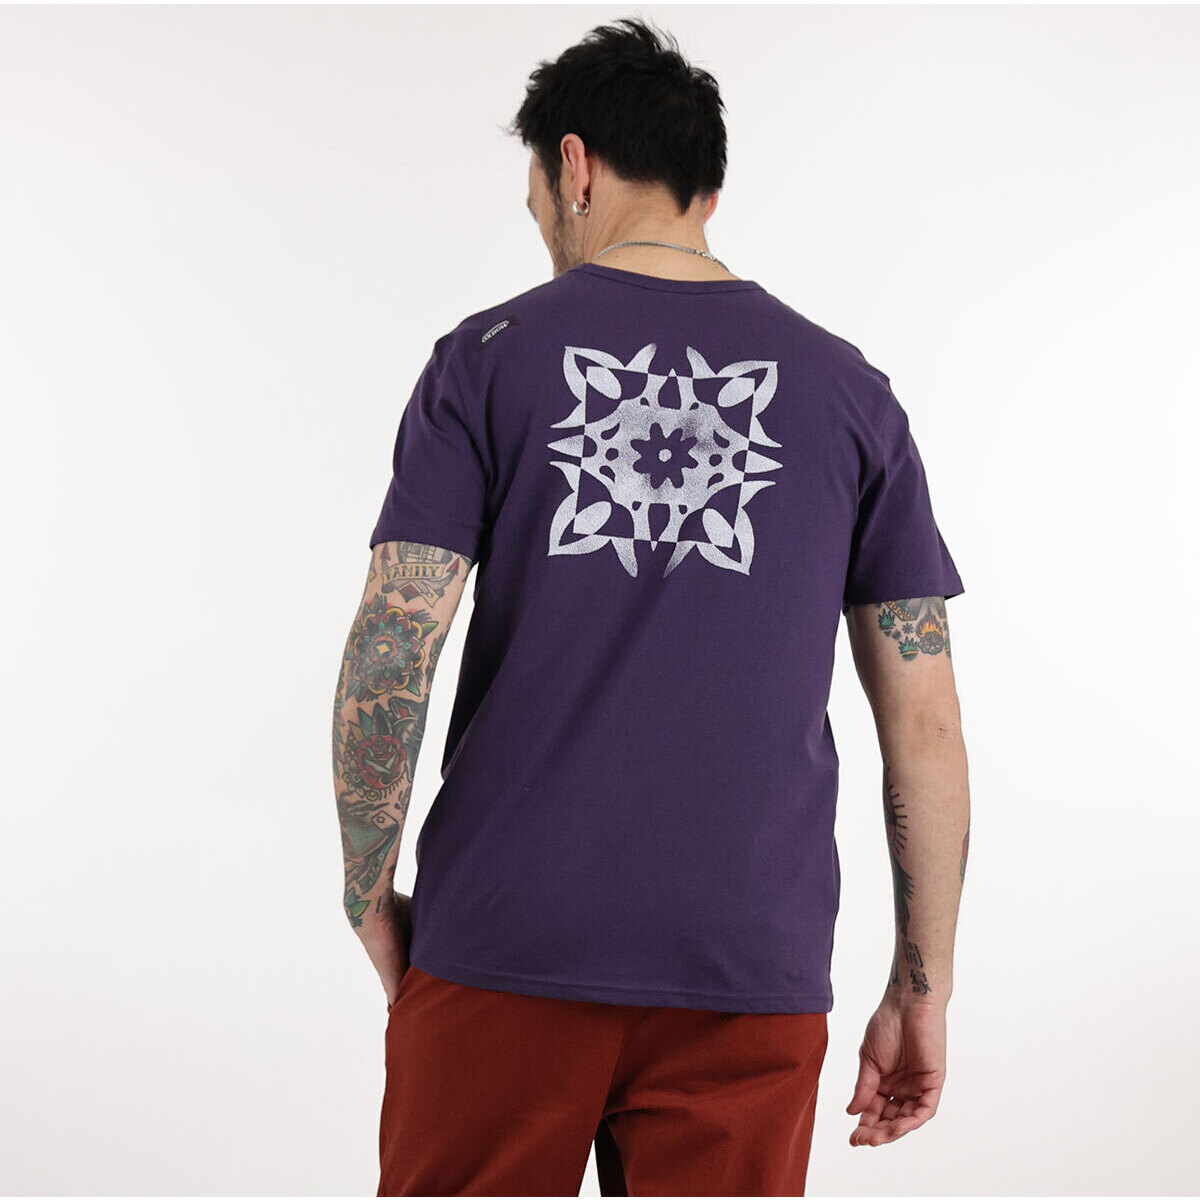 Oxbow Violet Tee-shirt manches courtes imprimé P2THONY vfWrDddz